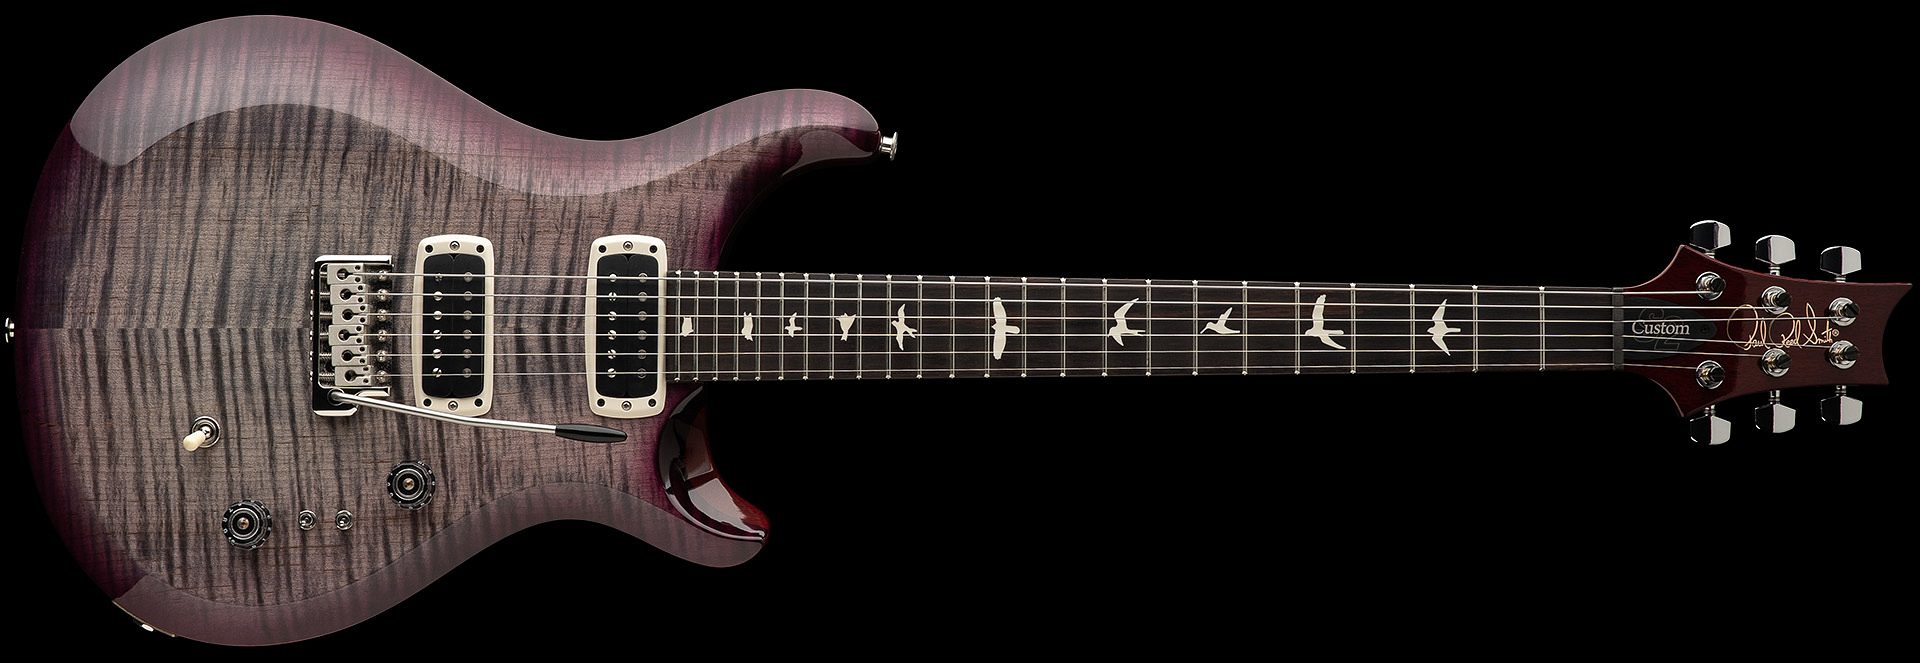 PRS Guitars USA S2 Custom 24-08 GI - Faded Gray Black Purple Burst 112819::GI: